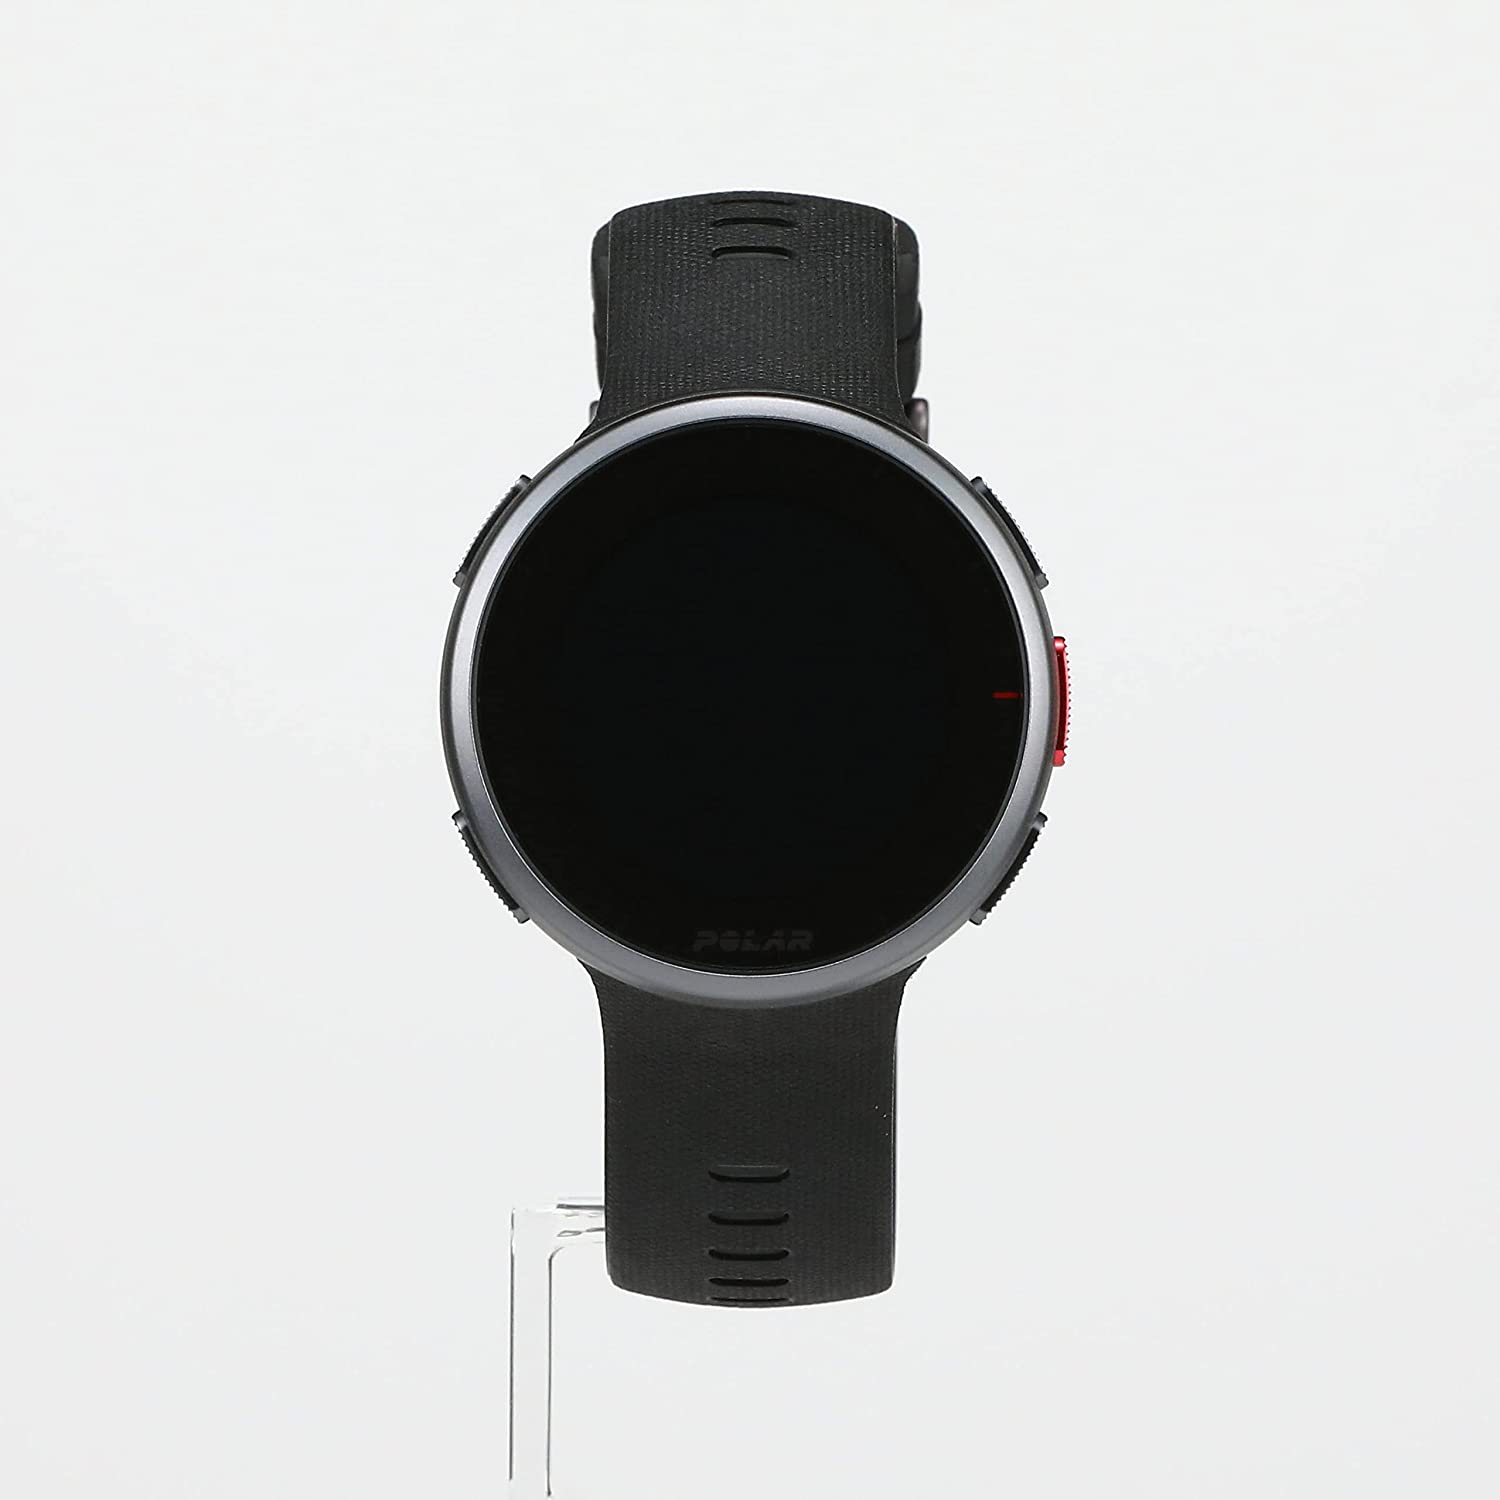 Polar Vantage V2 Premium Multisport Watch - Black - image 4 of 5